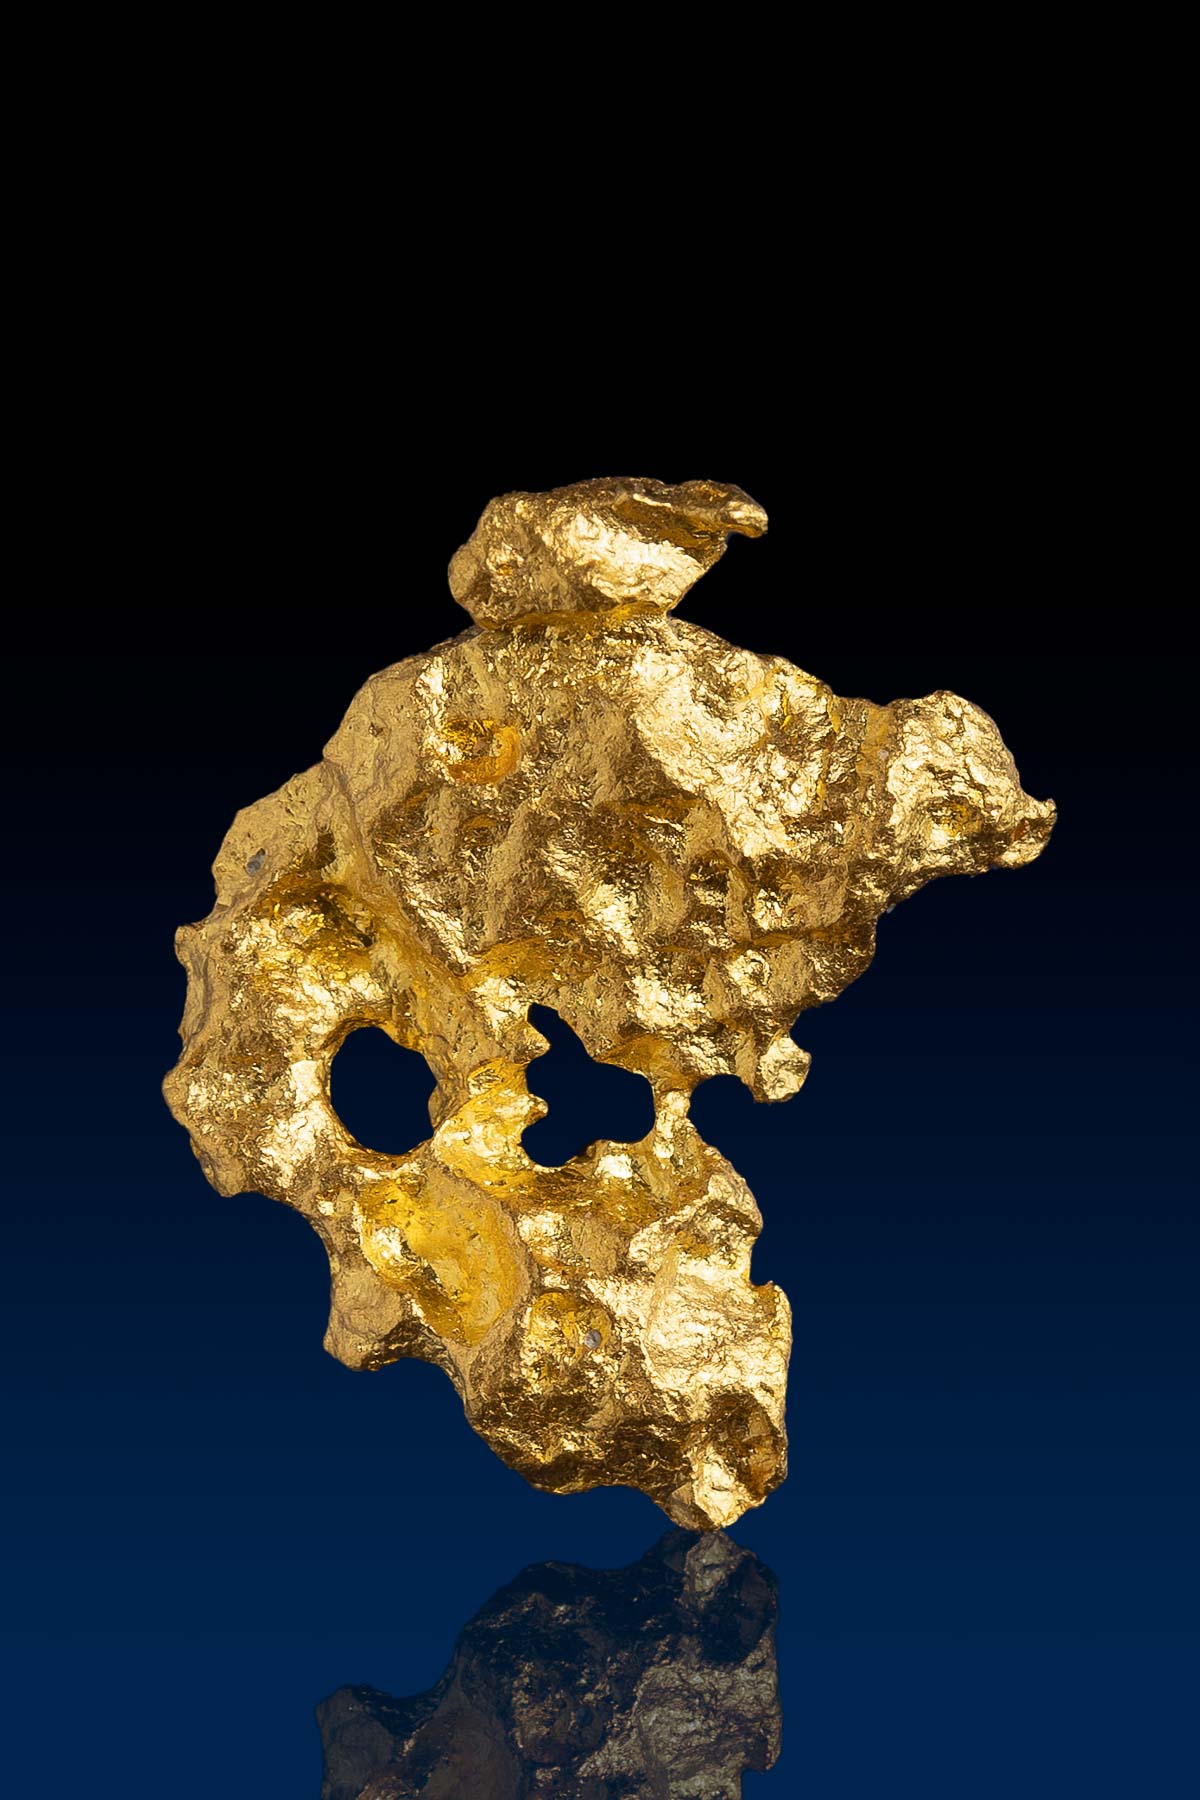 Pocketed Australian Natural Gold Nugget - 4.41 grams